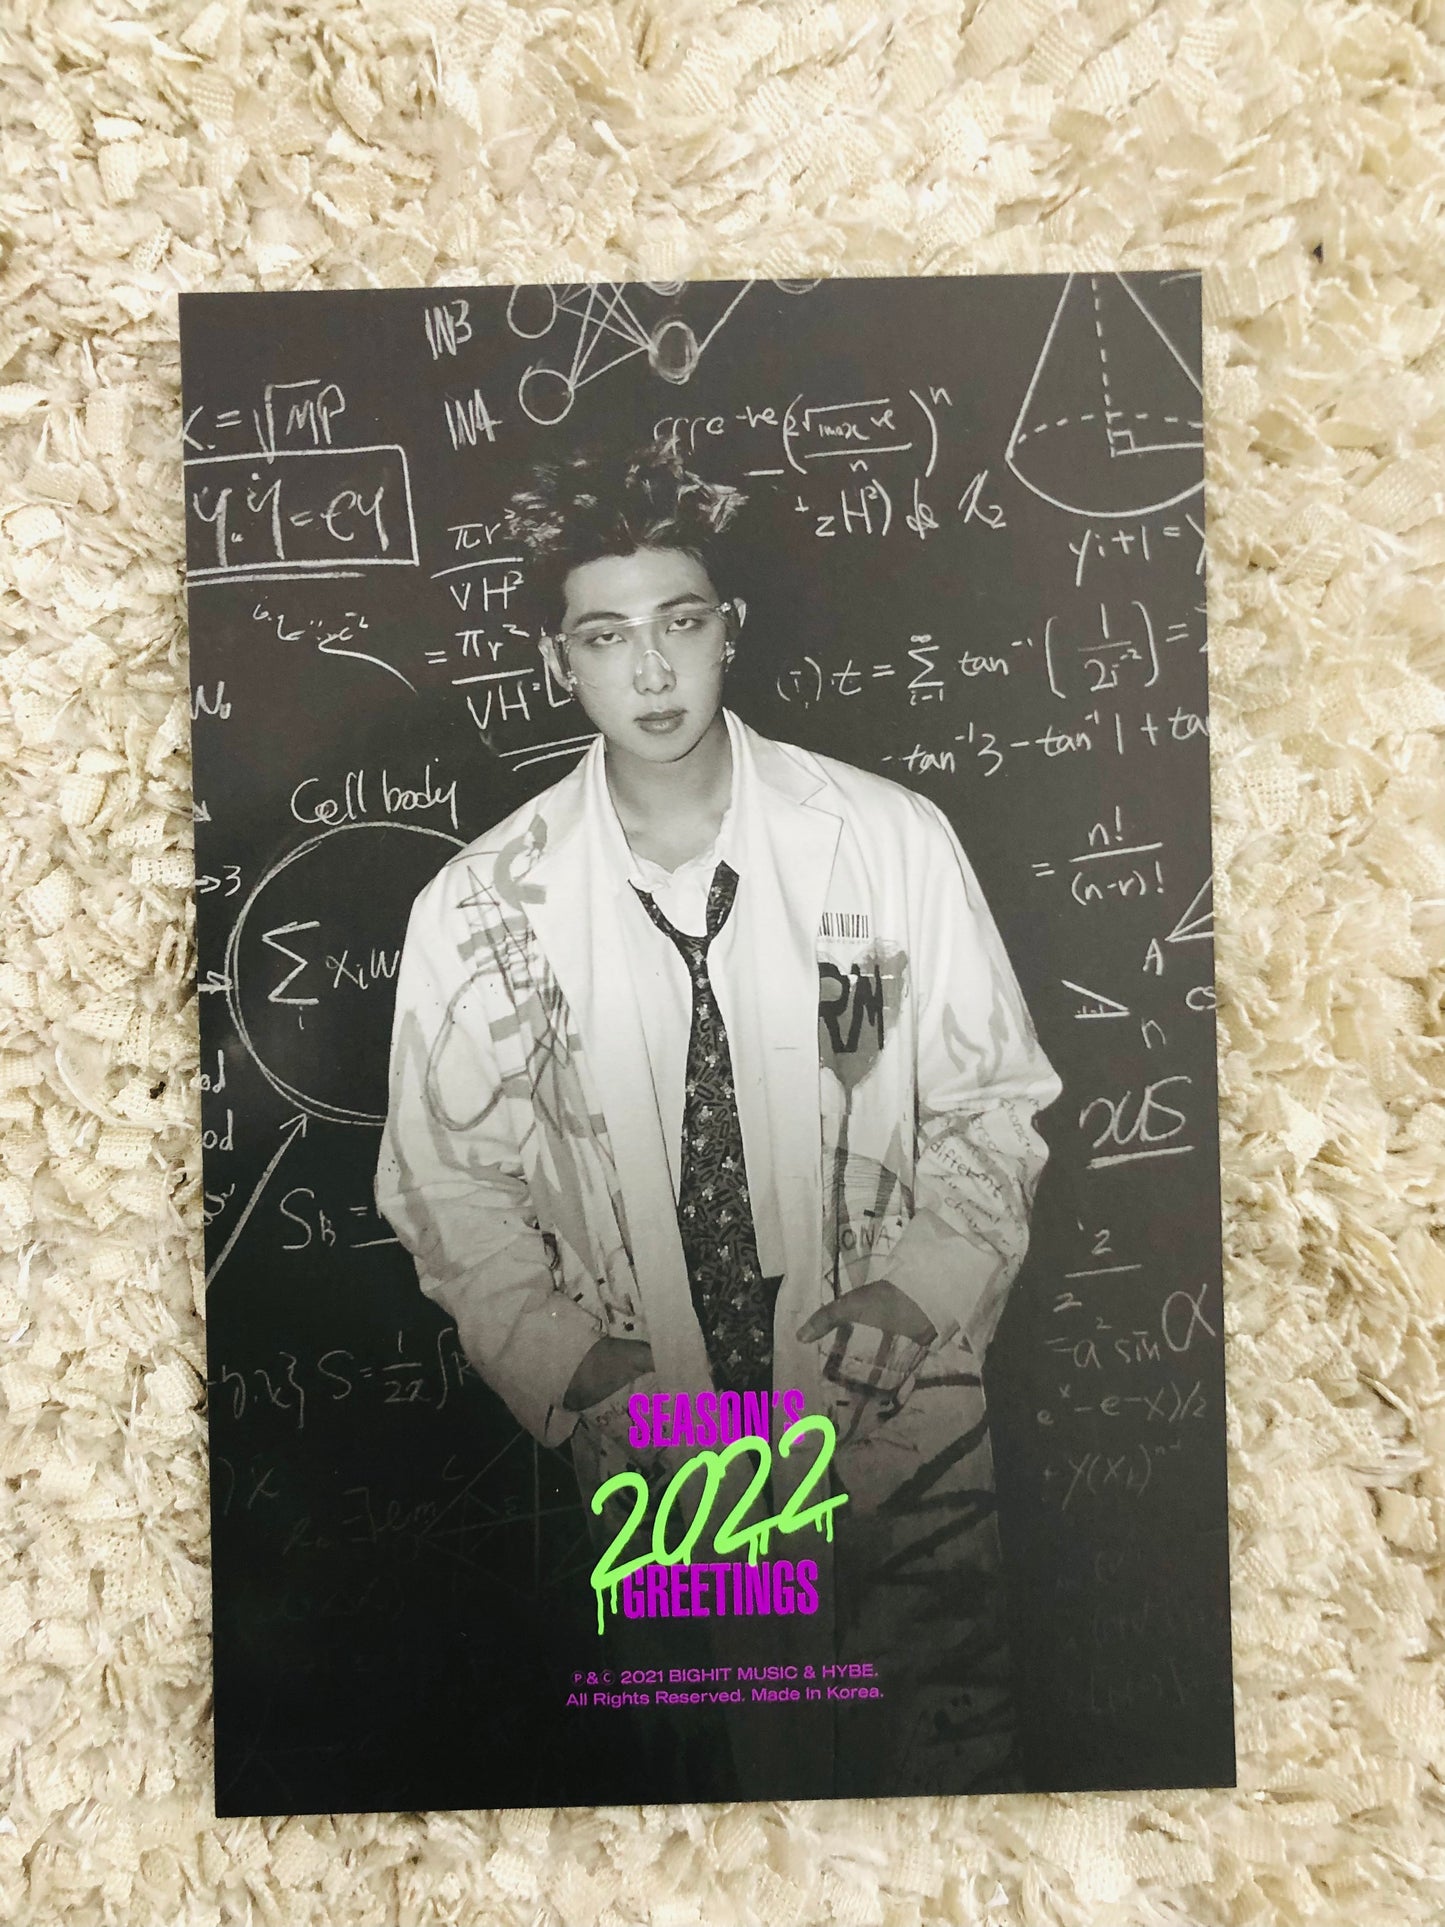 RM Season’s greetings 2022 Postcard